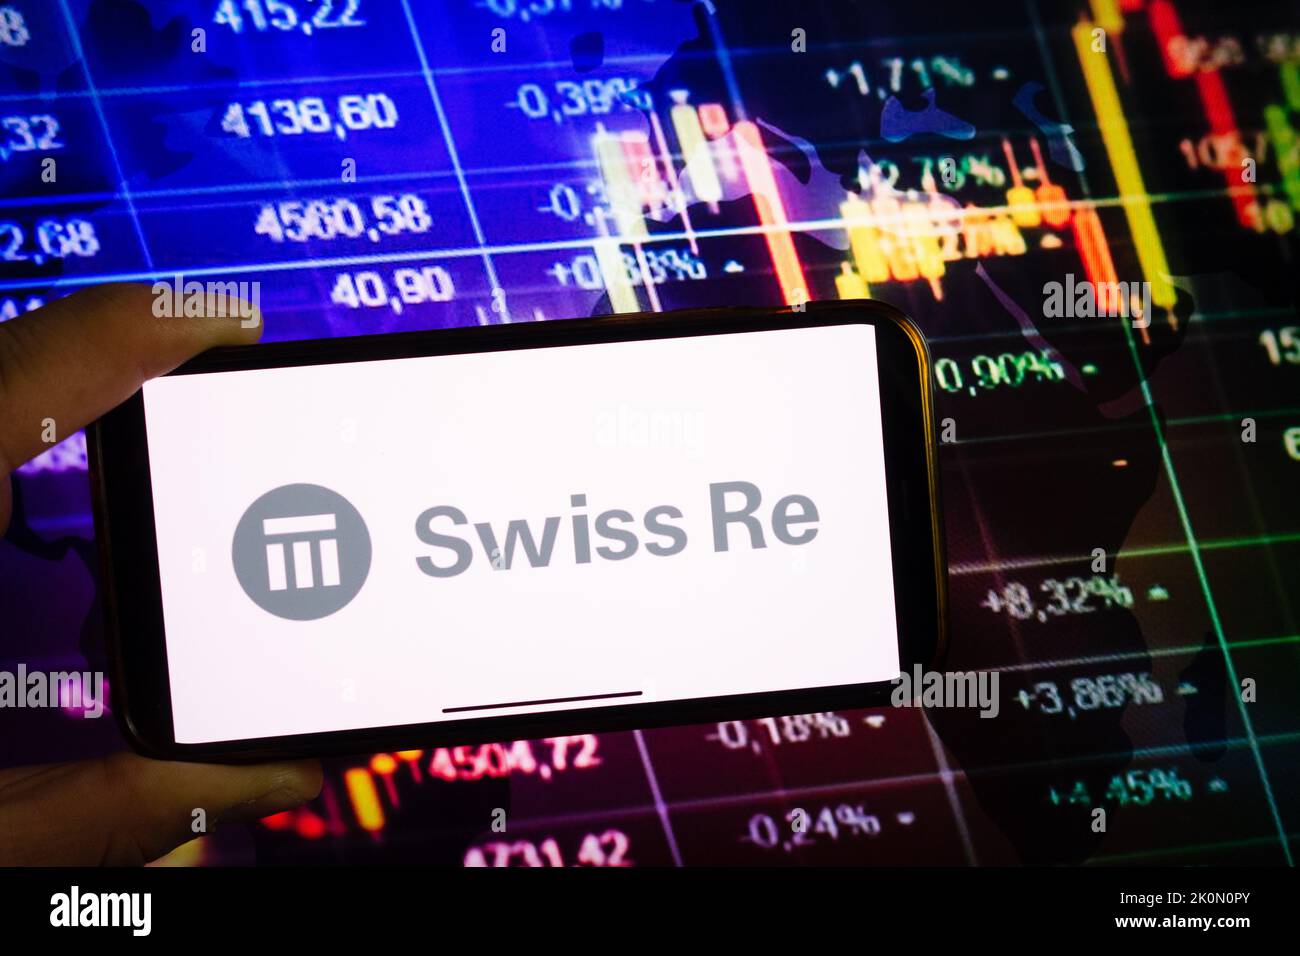 KONSKIE, POLAND - September 10, 2022: Smartphone displaying logo of Swiss Re company on stock exchange diagram background Stock Photo